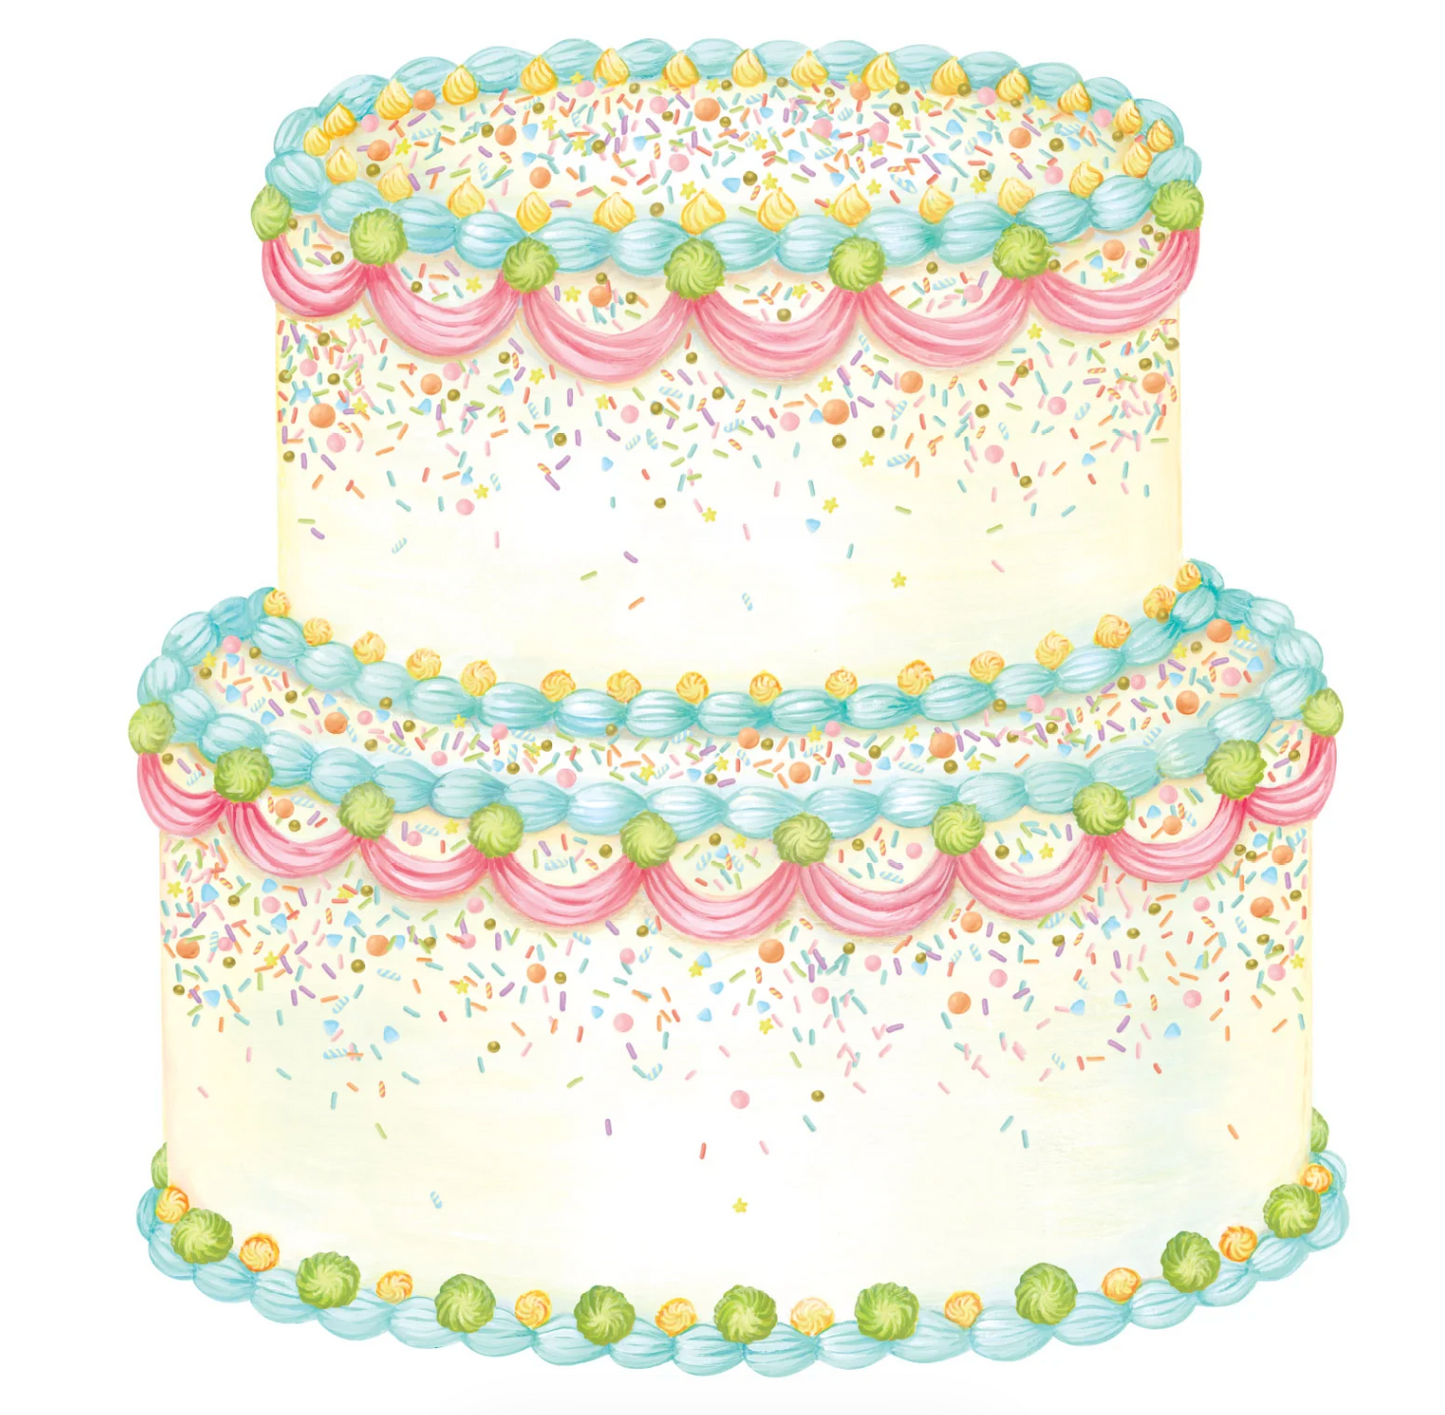 Die-cut Birthday Cake Placemat